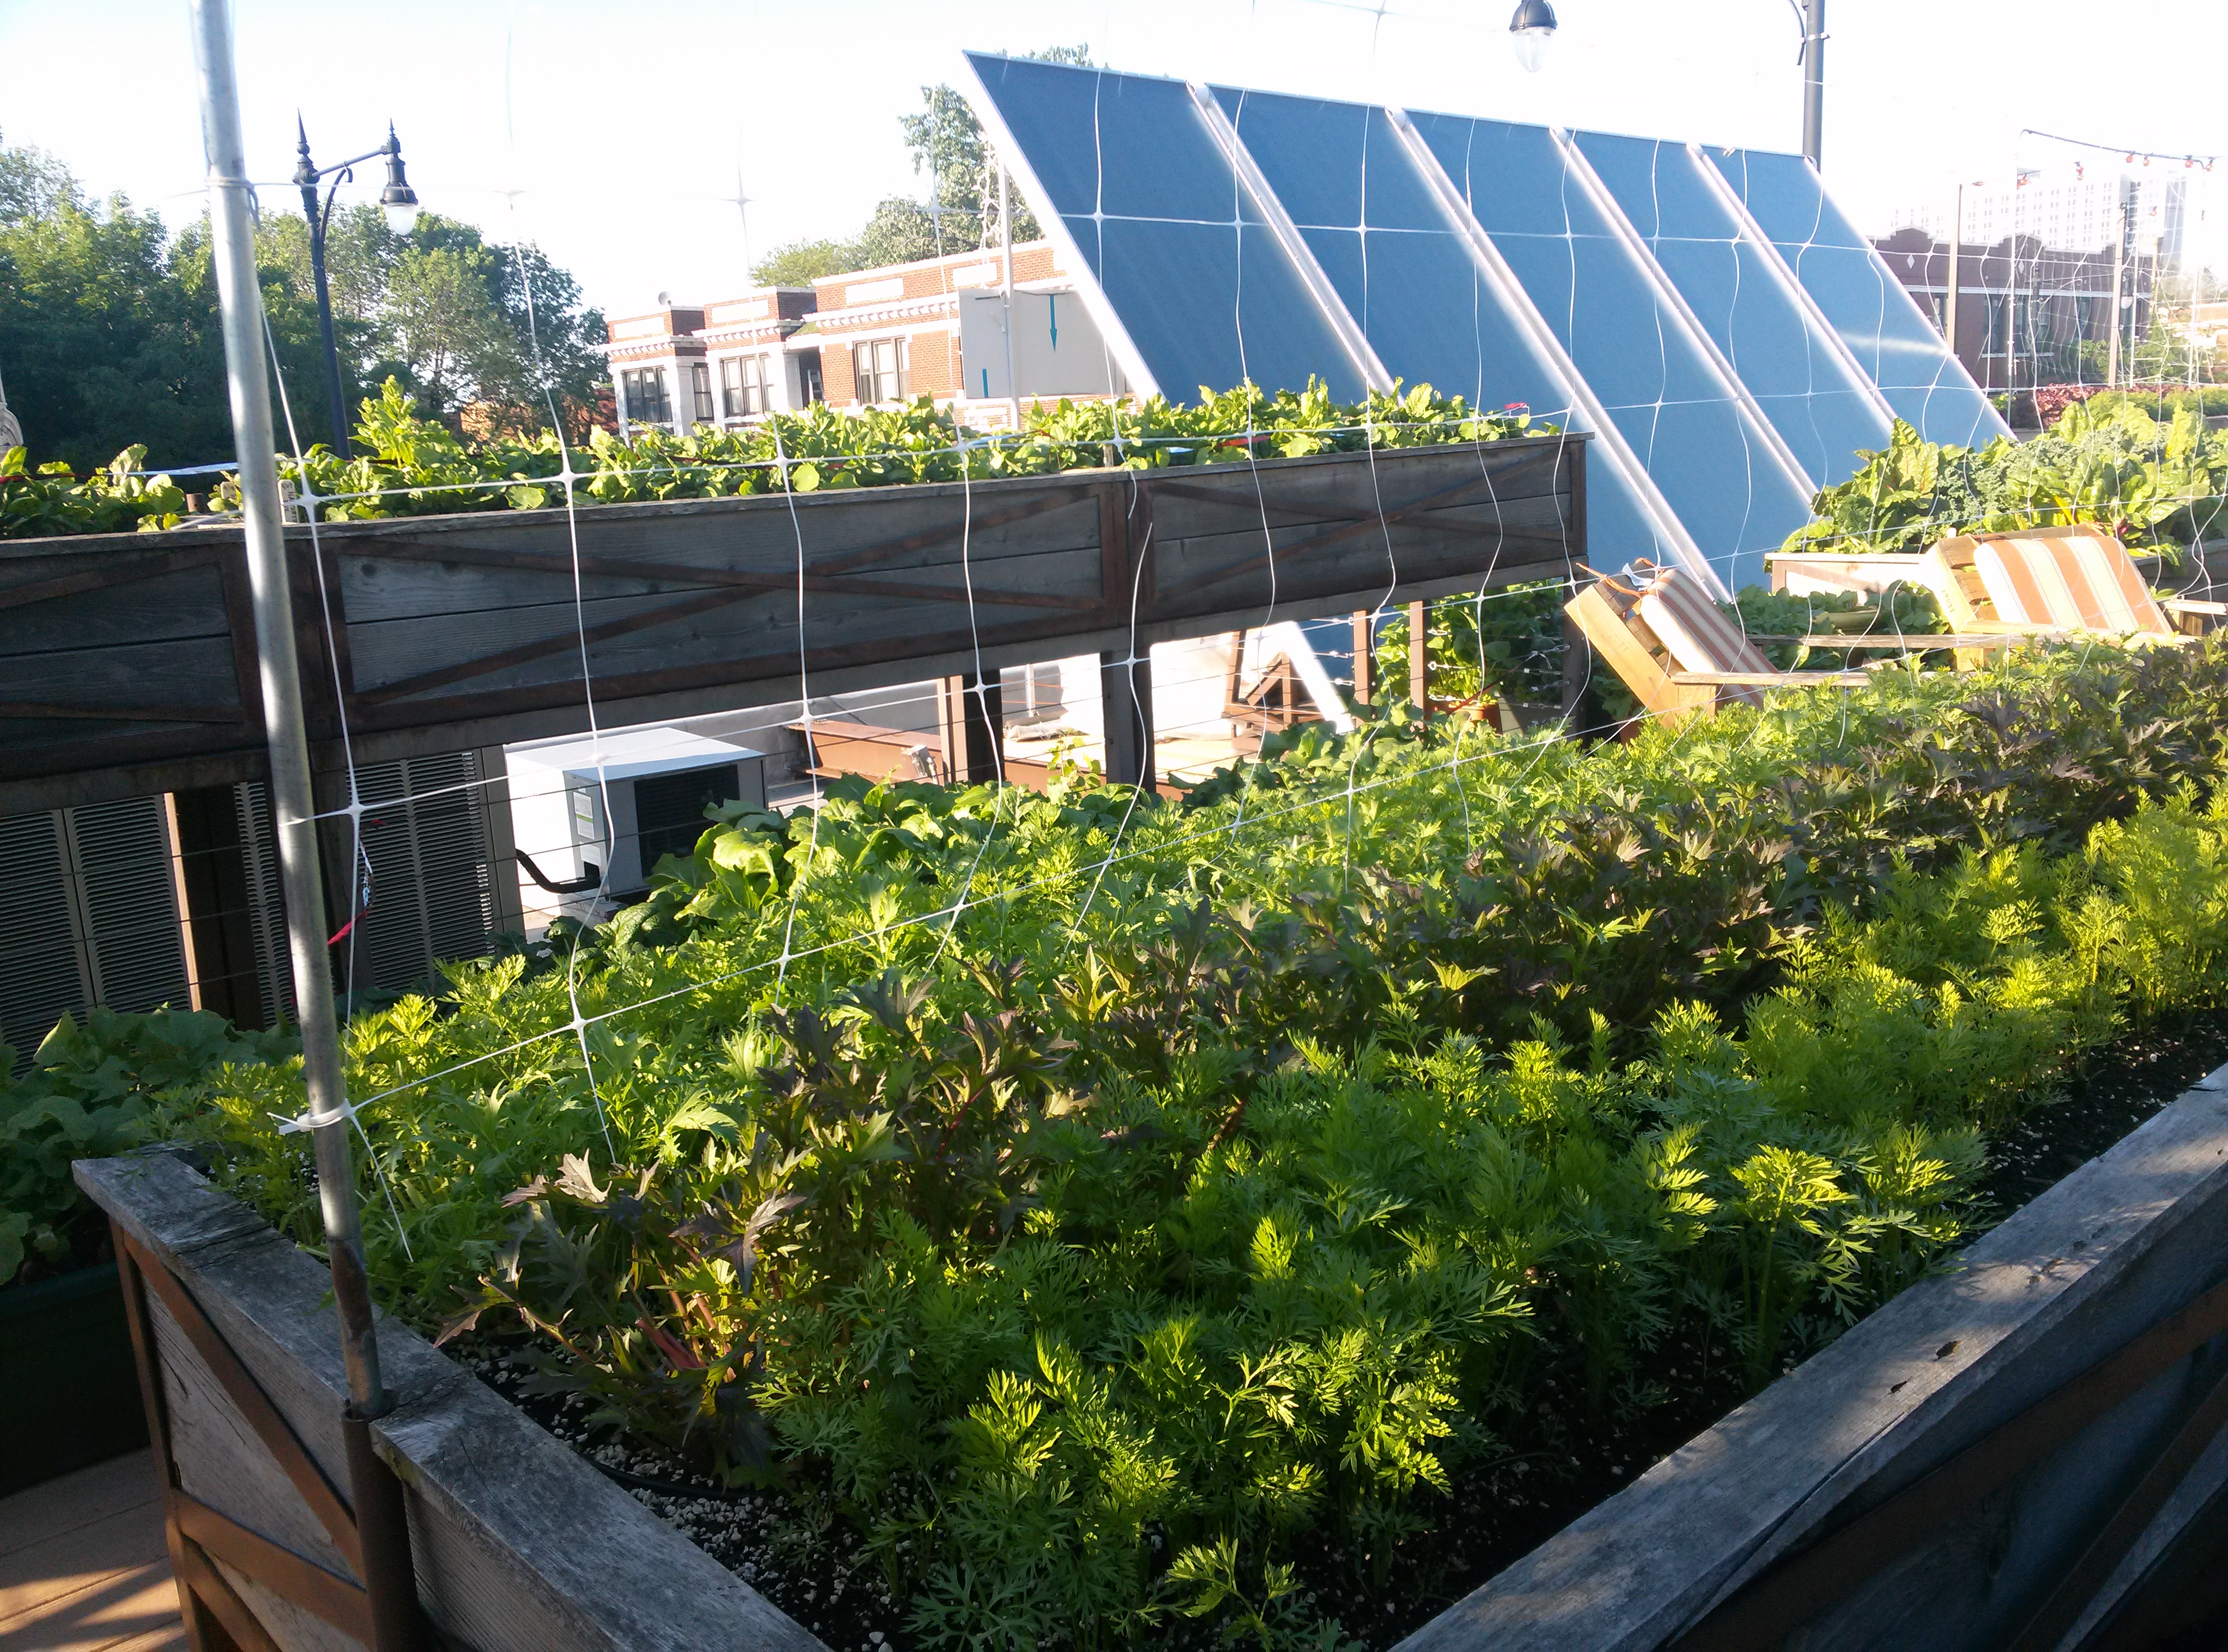 rooftop vegetable garden ideas photo - 9